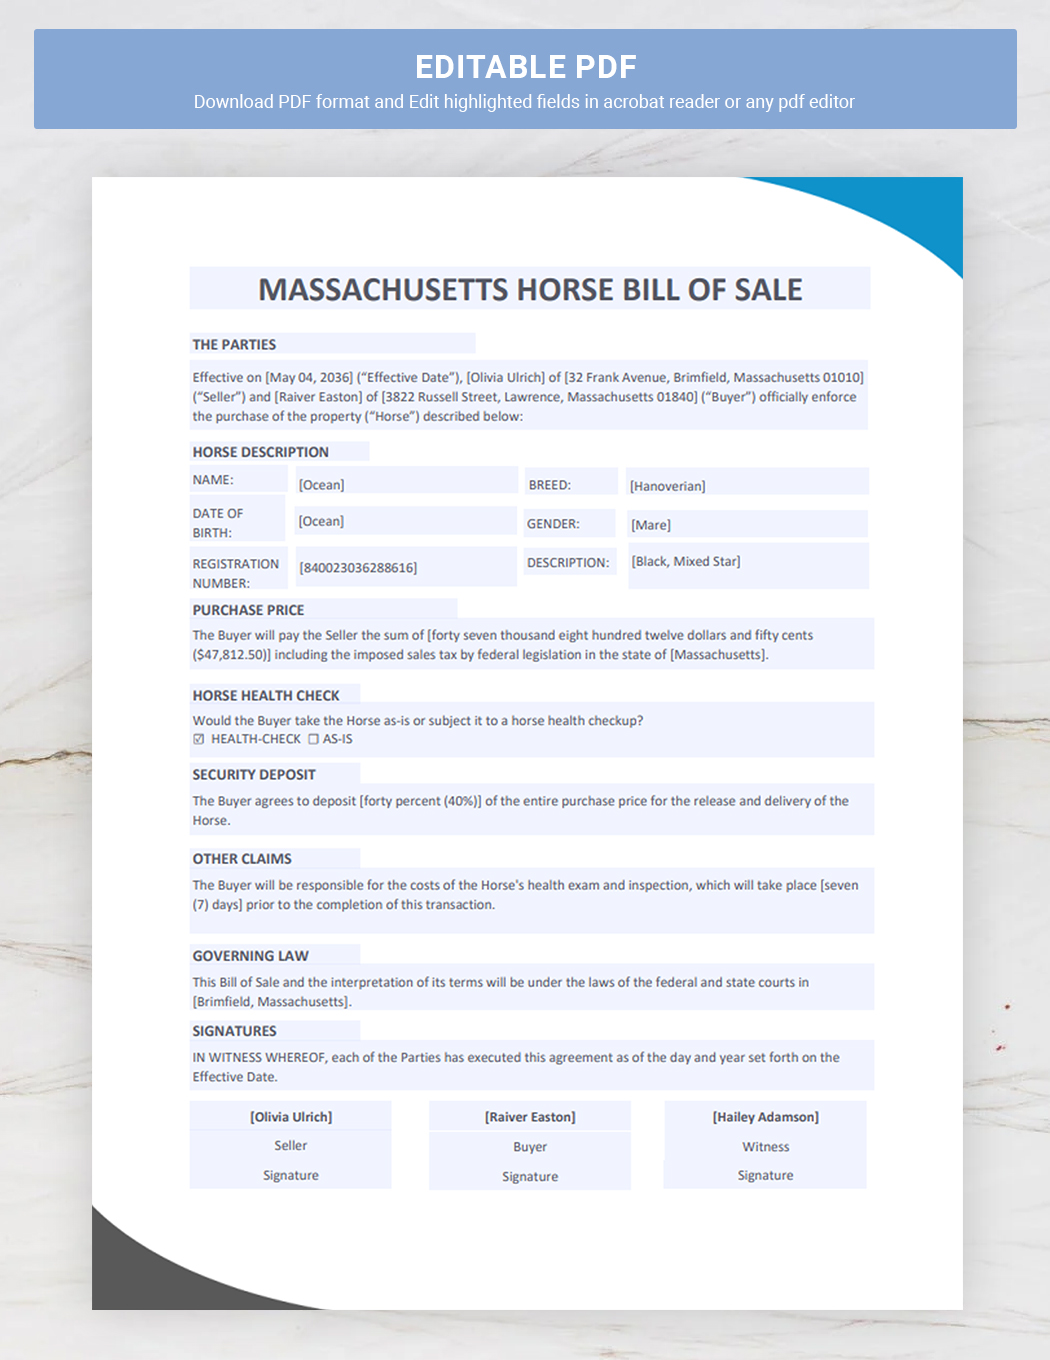 Massachusetts Horse Bill of Sale Template